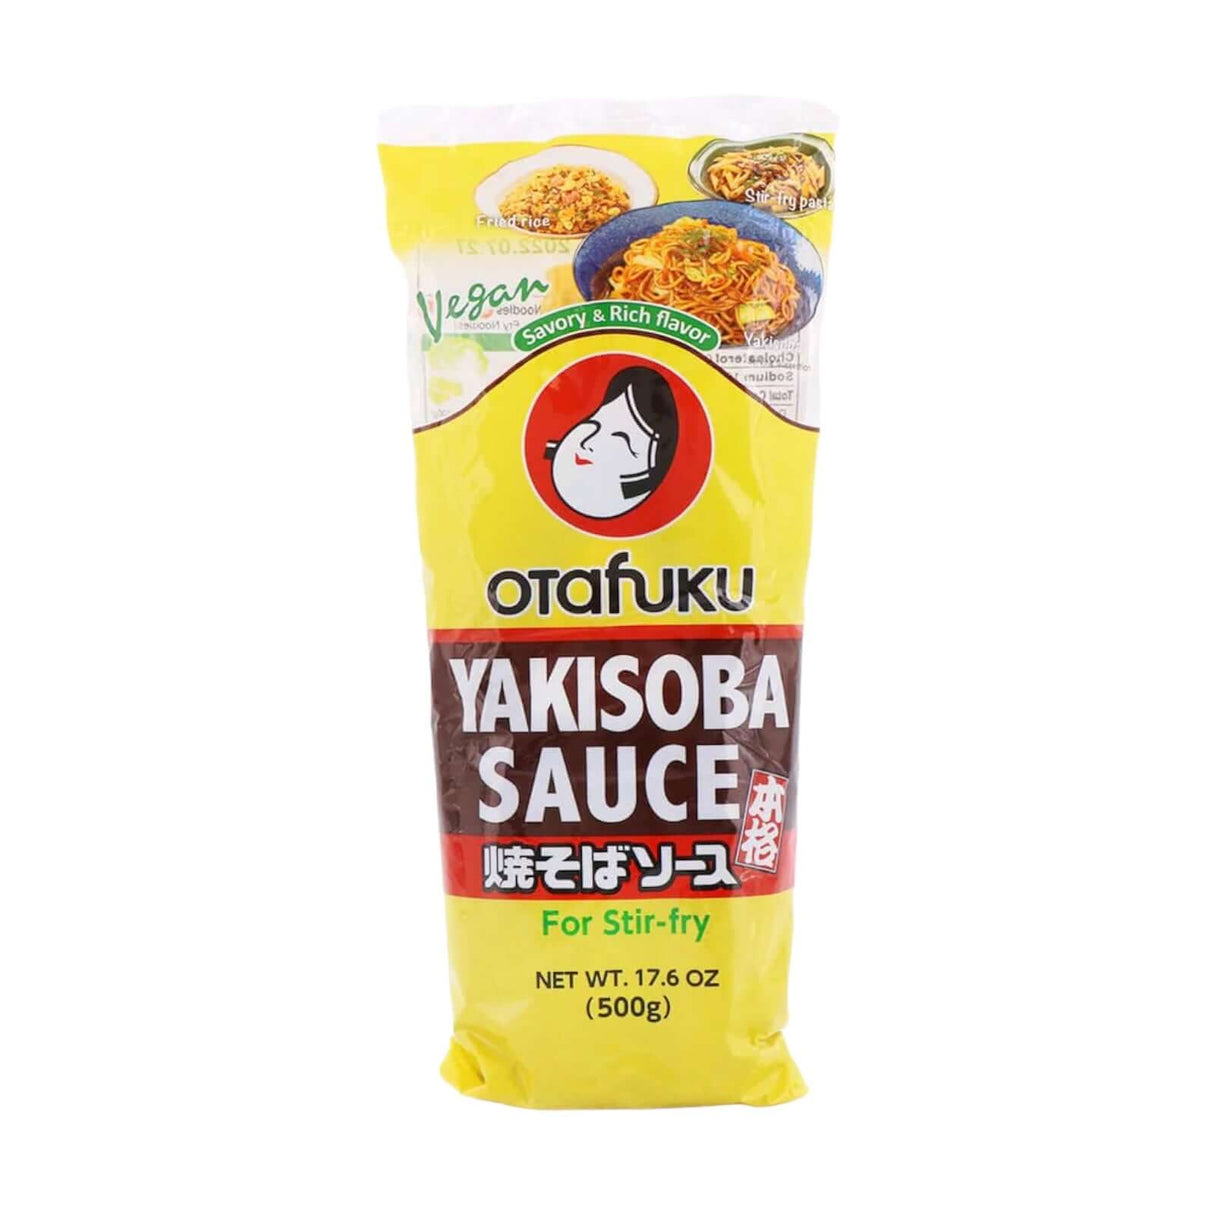 Otafuku Yakisoba Sauce For Dipping